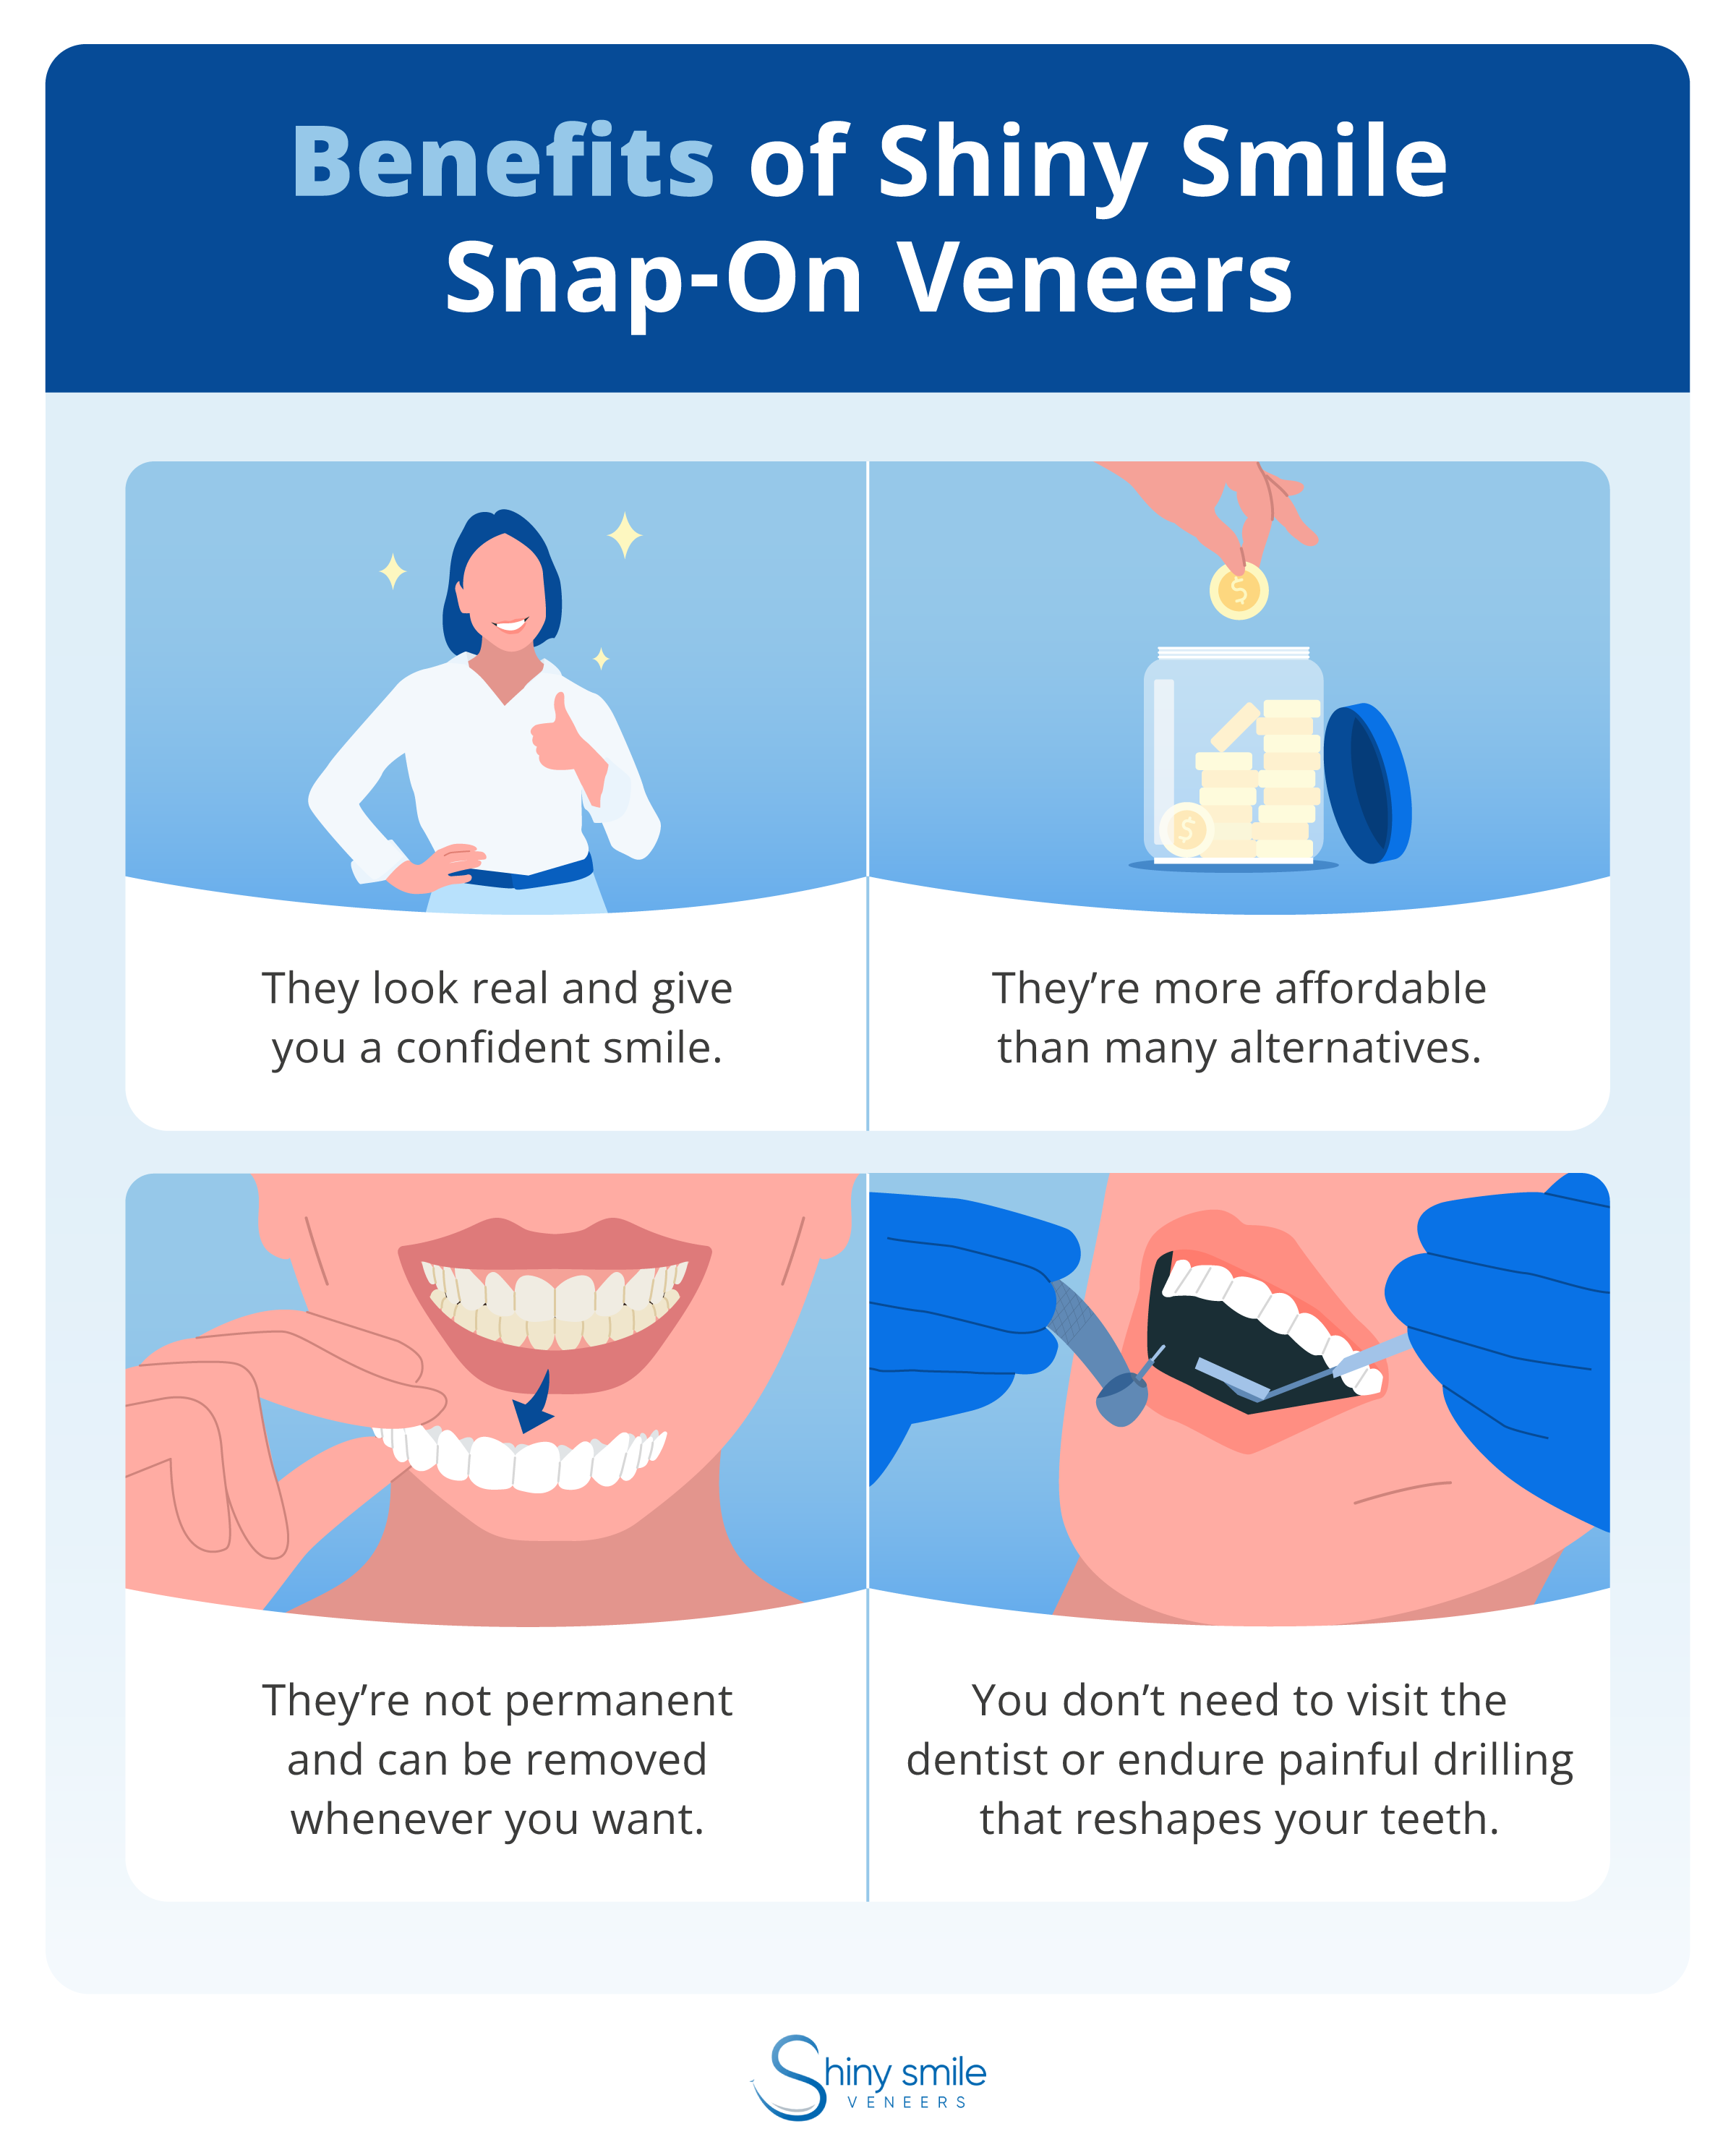 benefits of Shiny Smile snap-on veneers